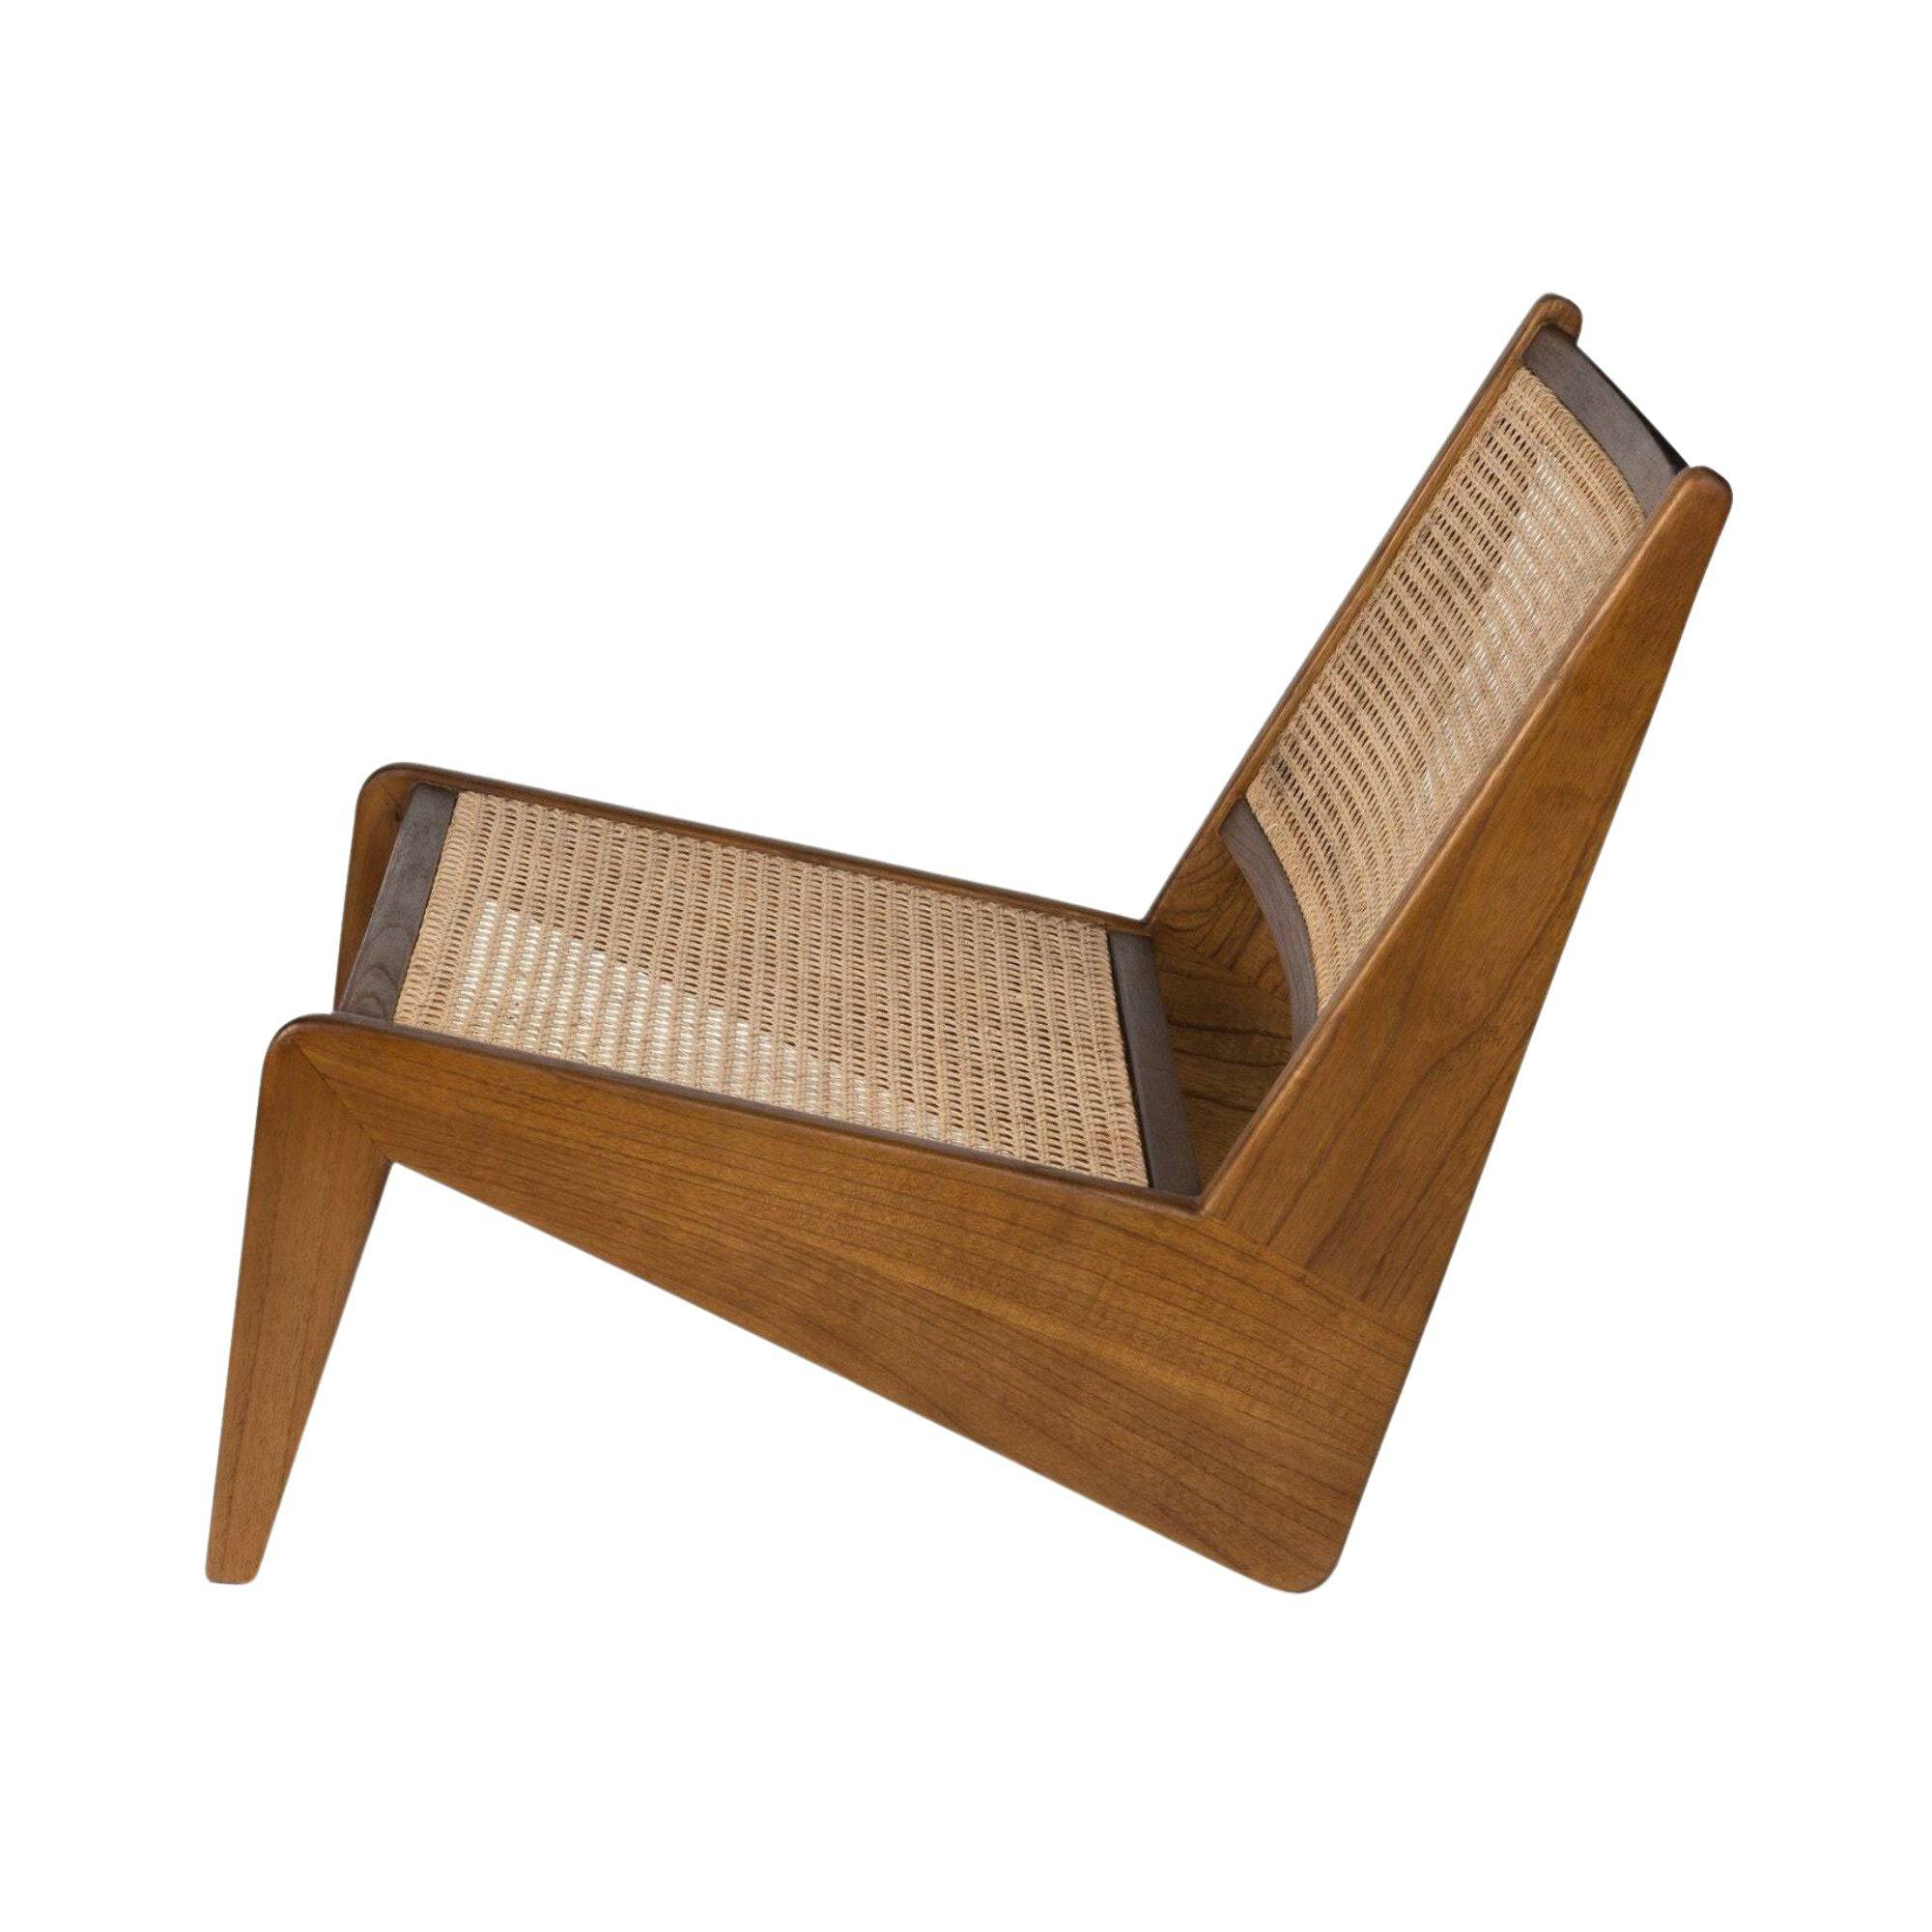 Chandigarh Kangaroo Chair - THAT COOL LIVING